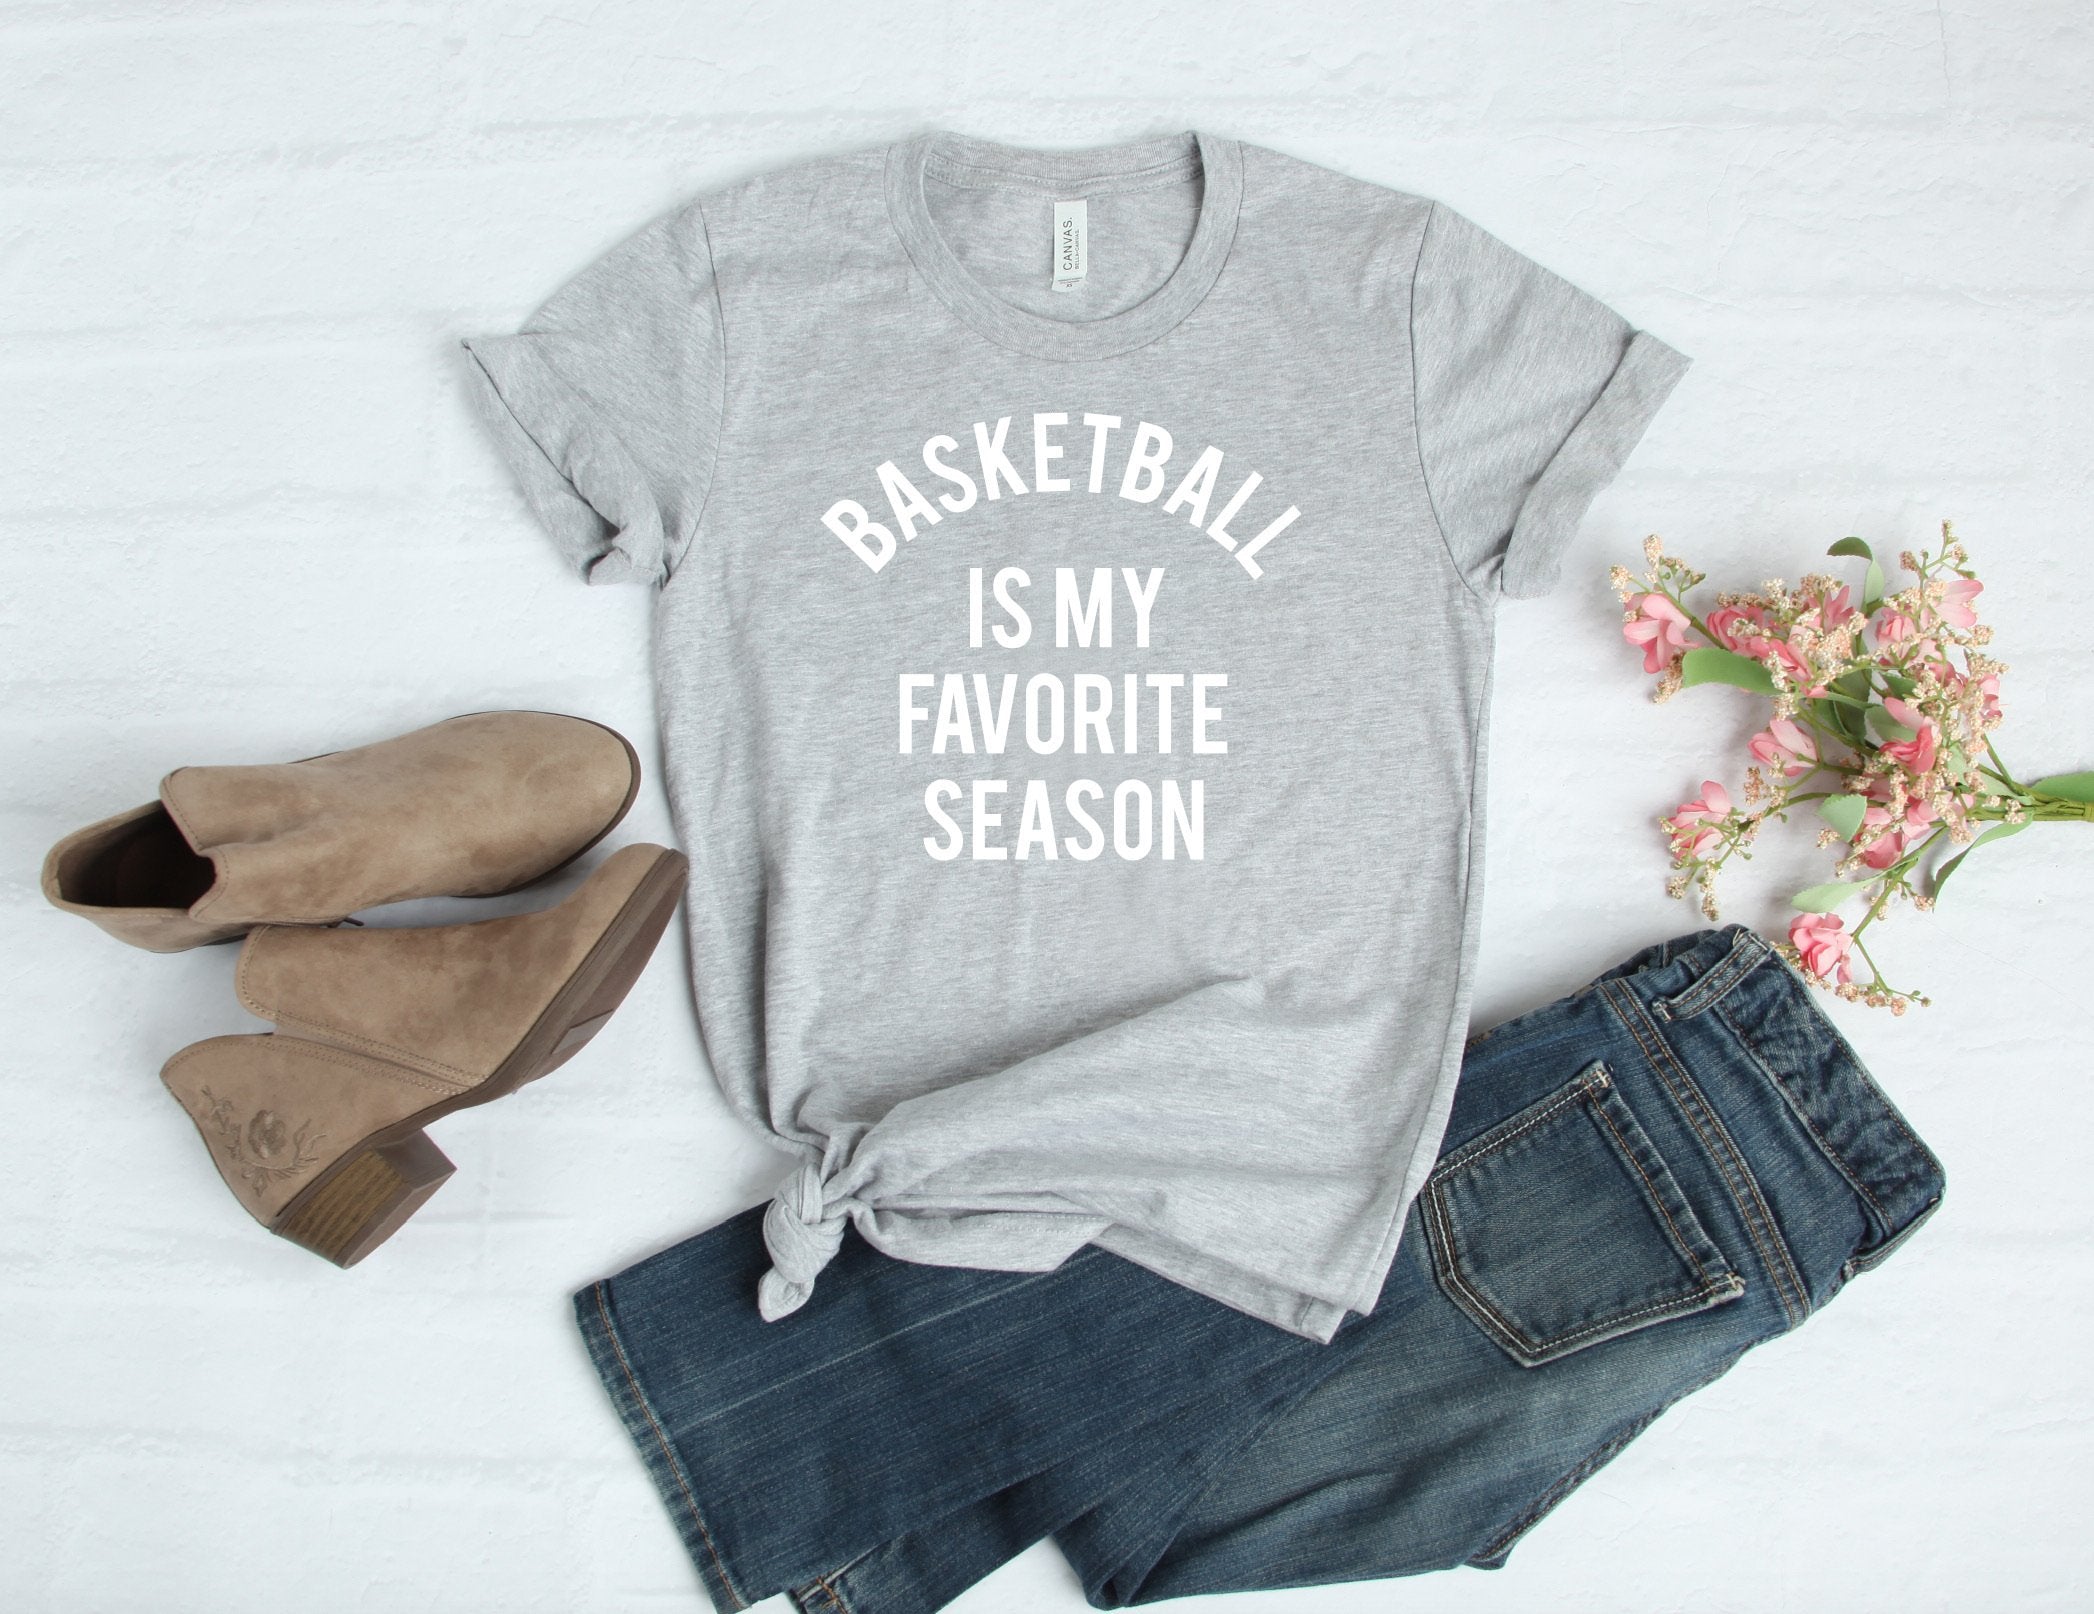 Basketball is my favorite Season